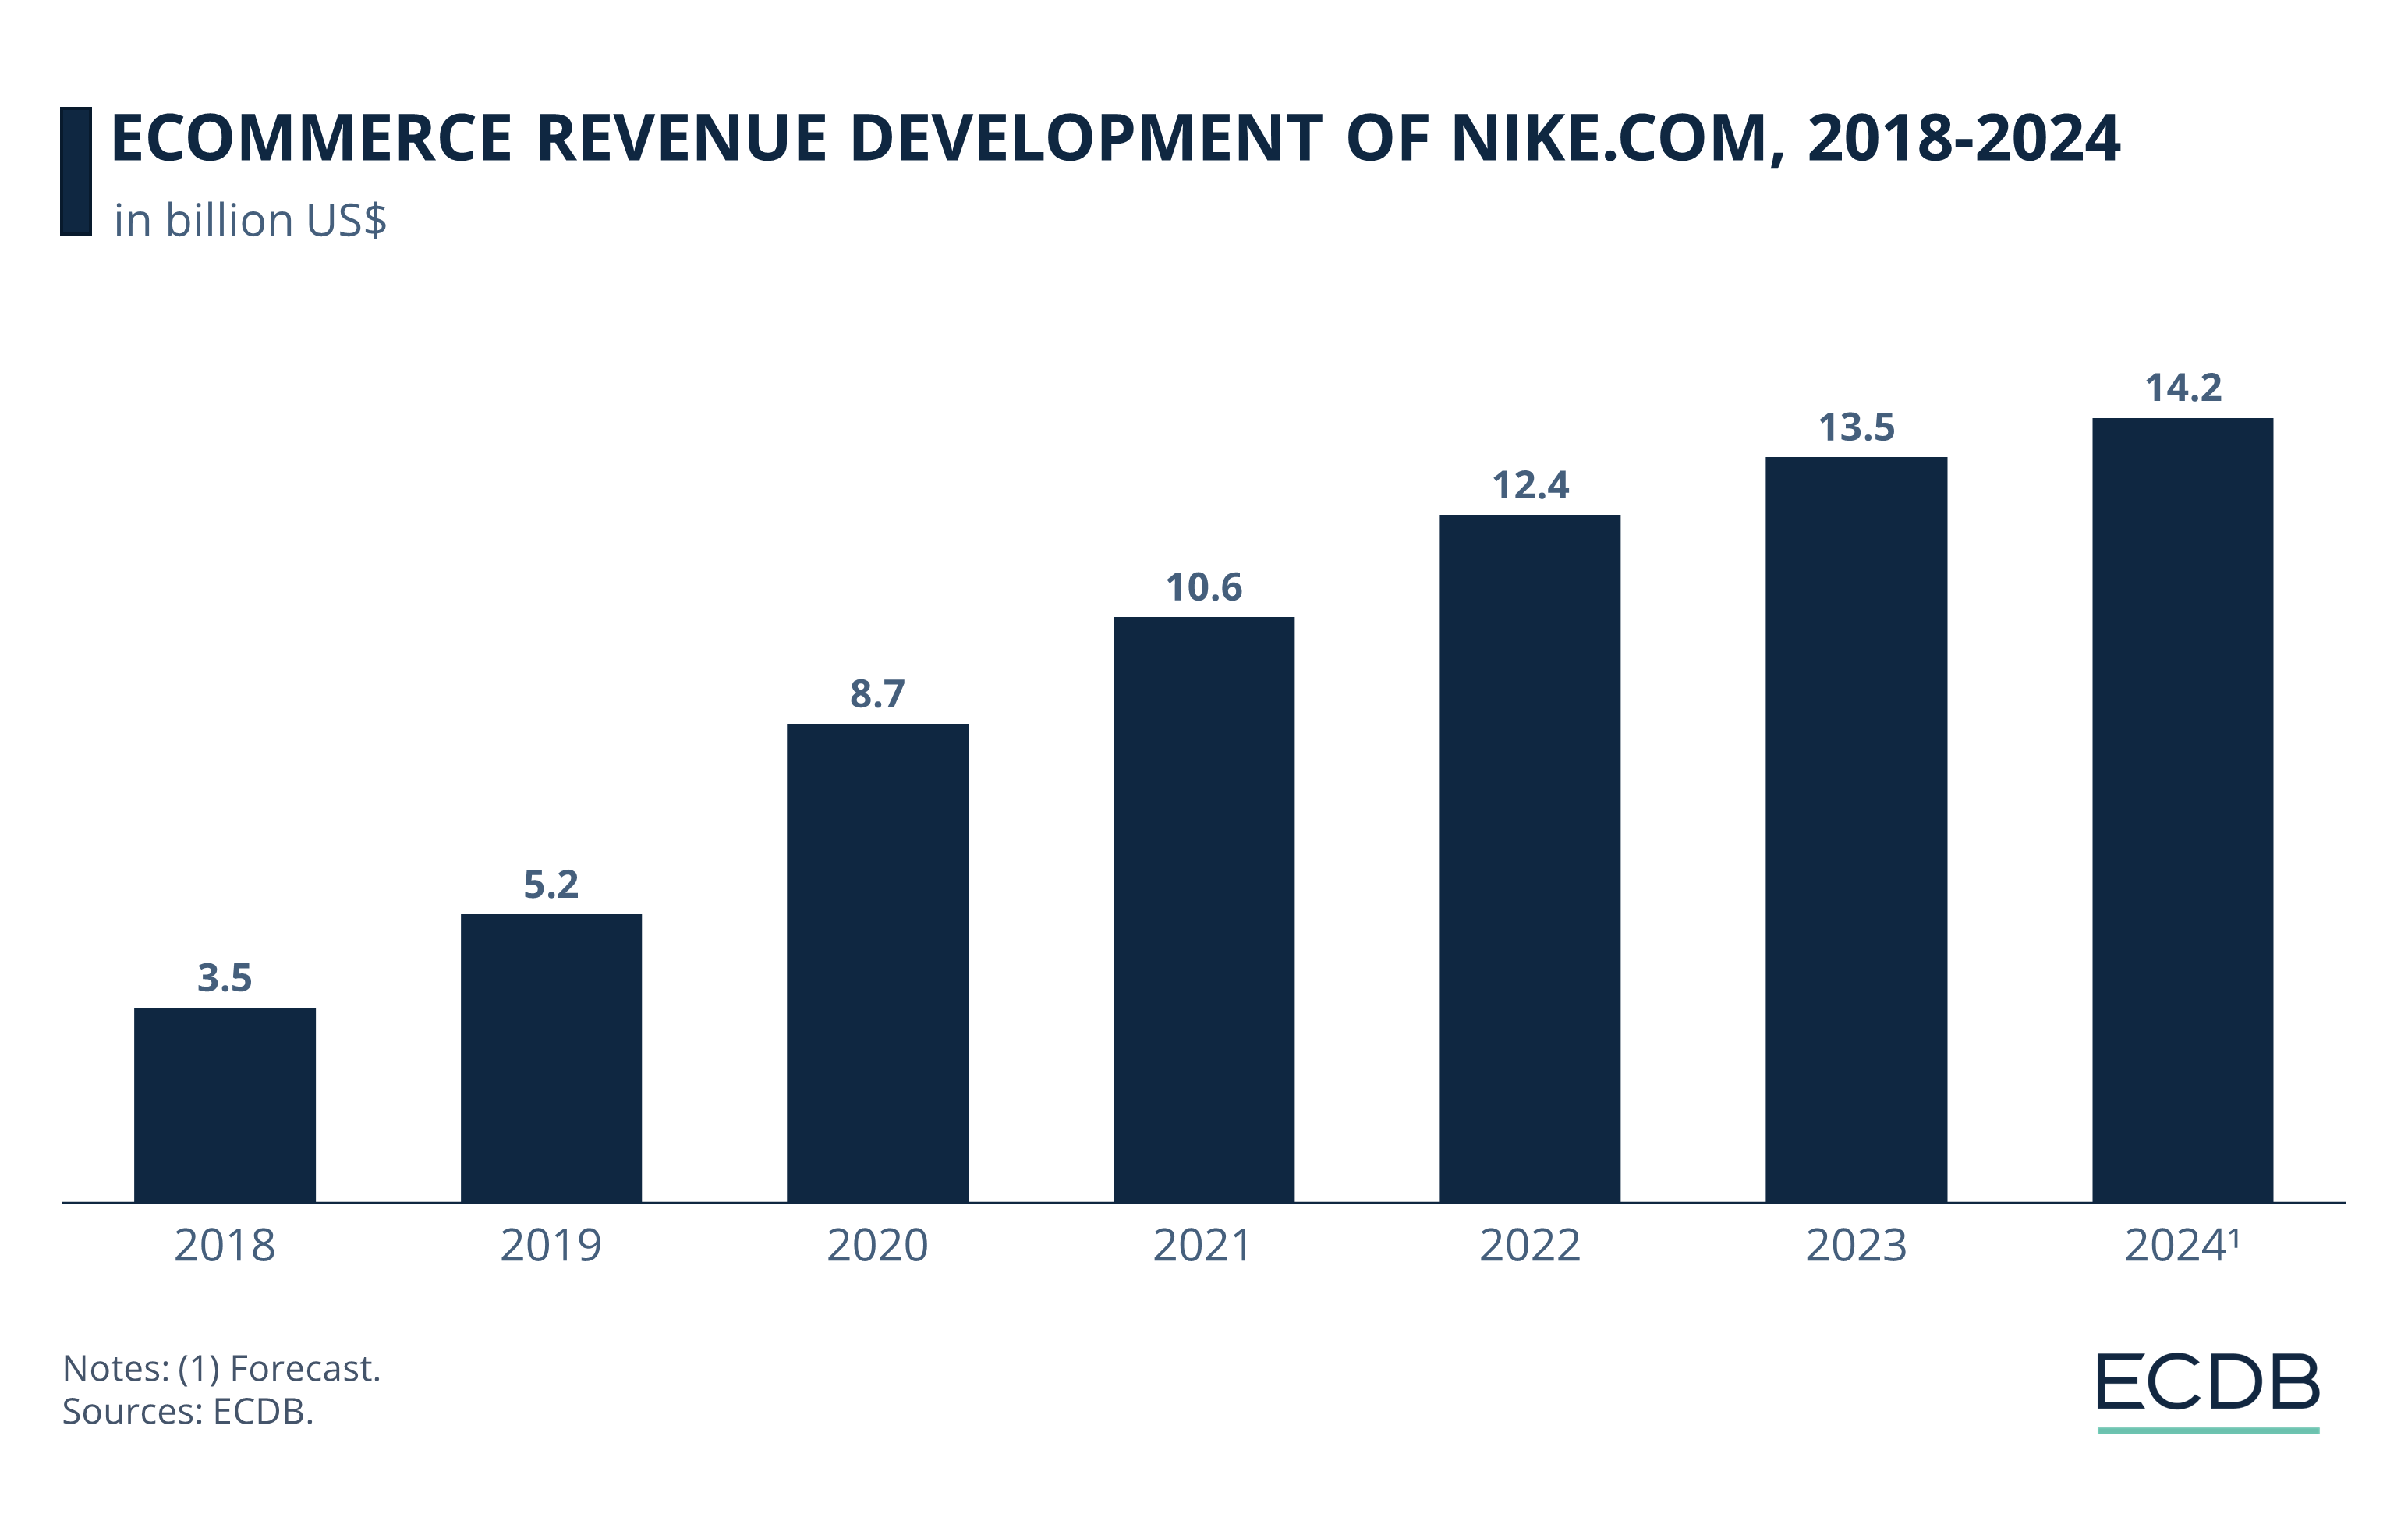 eCommerce Revenue Development of Nike.com, 2018-2024